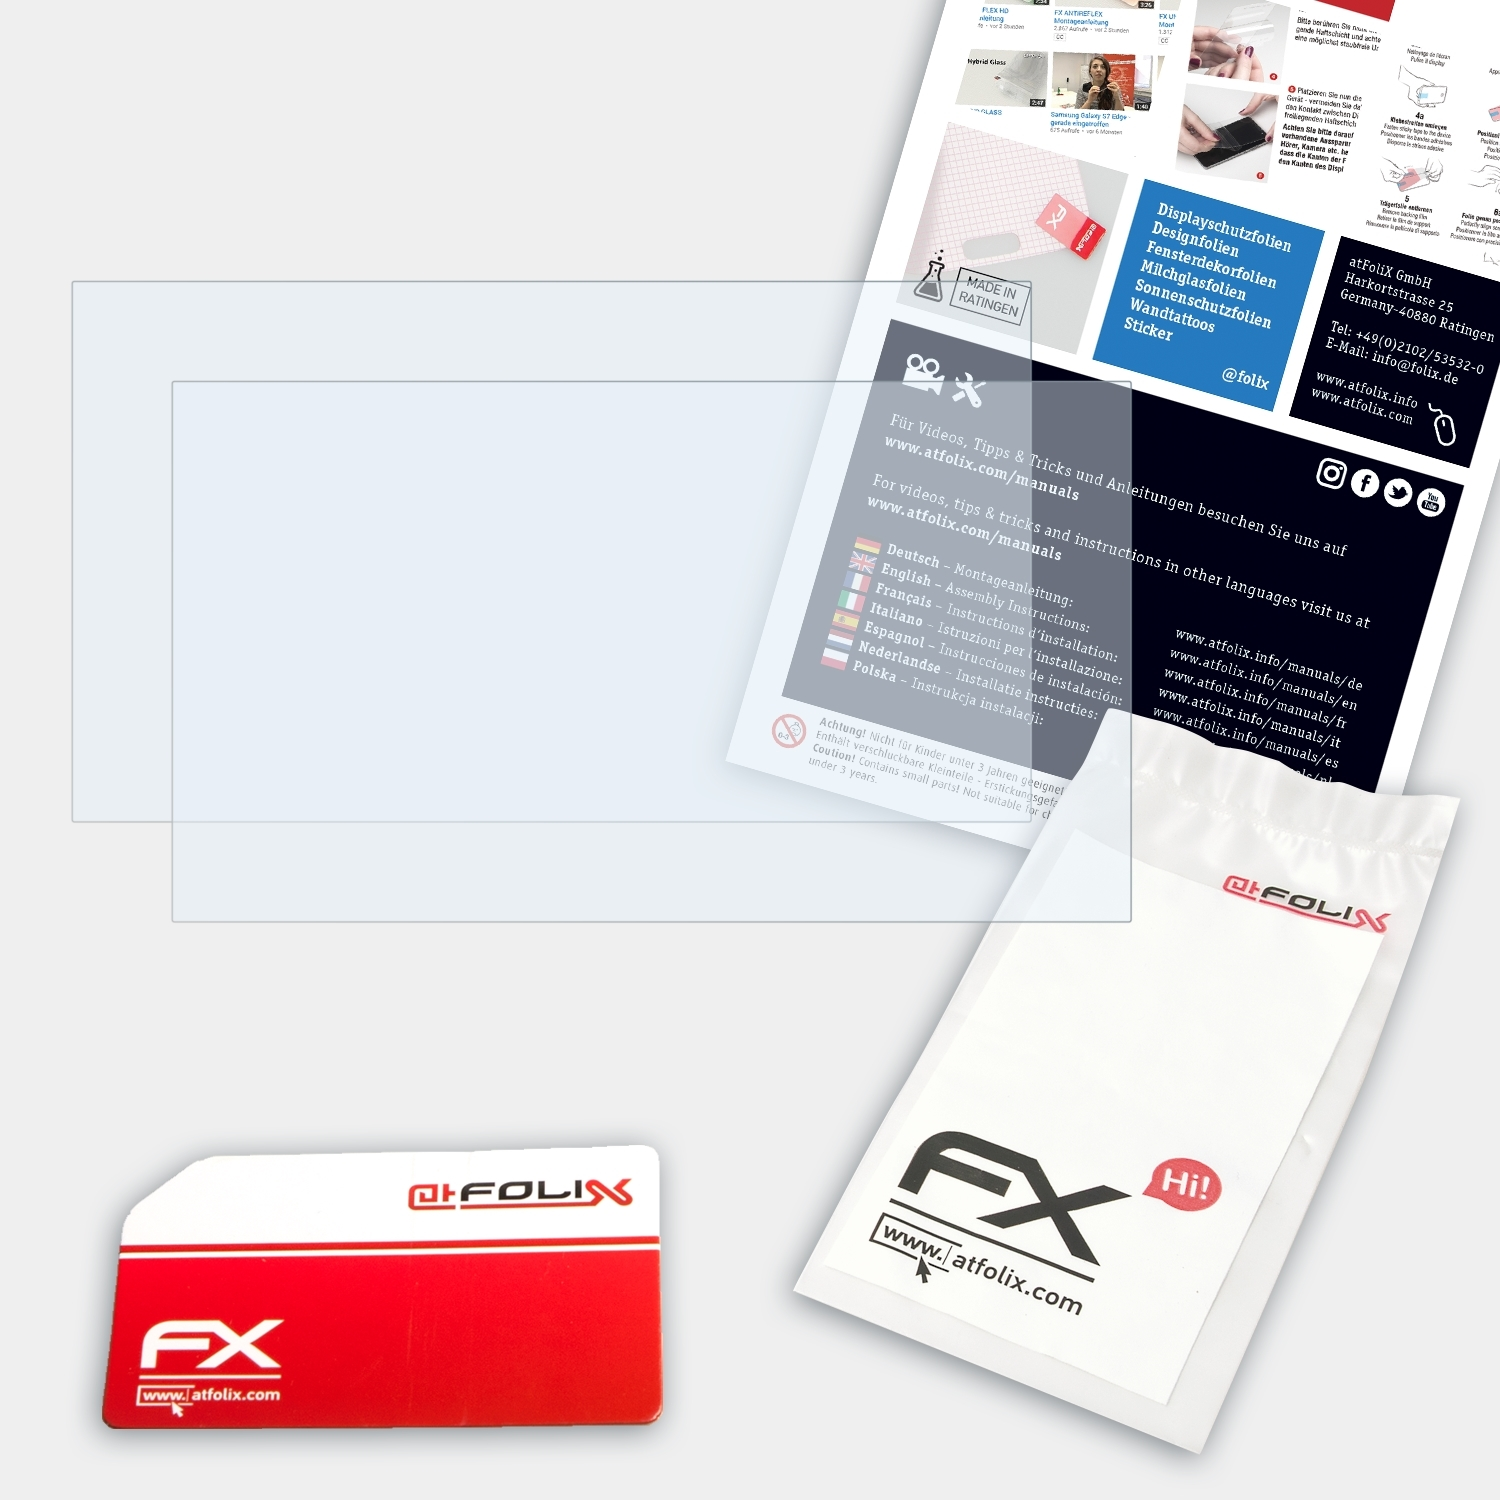 Displayschutz(für ATFOLIX ToughBook Panasonic CF-54) FX-Clear 2x